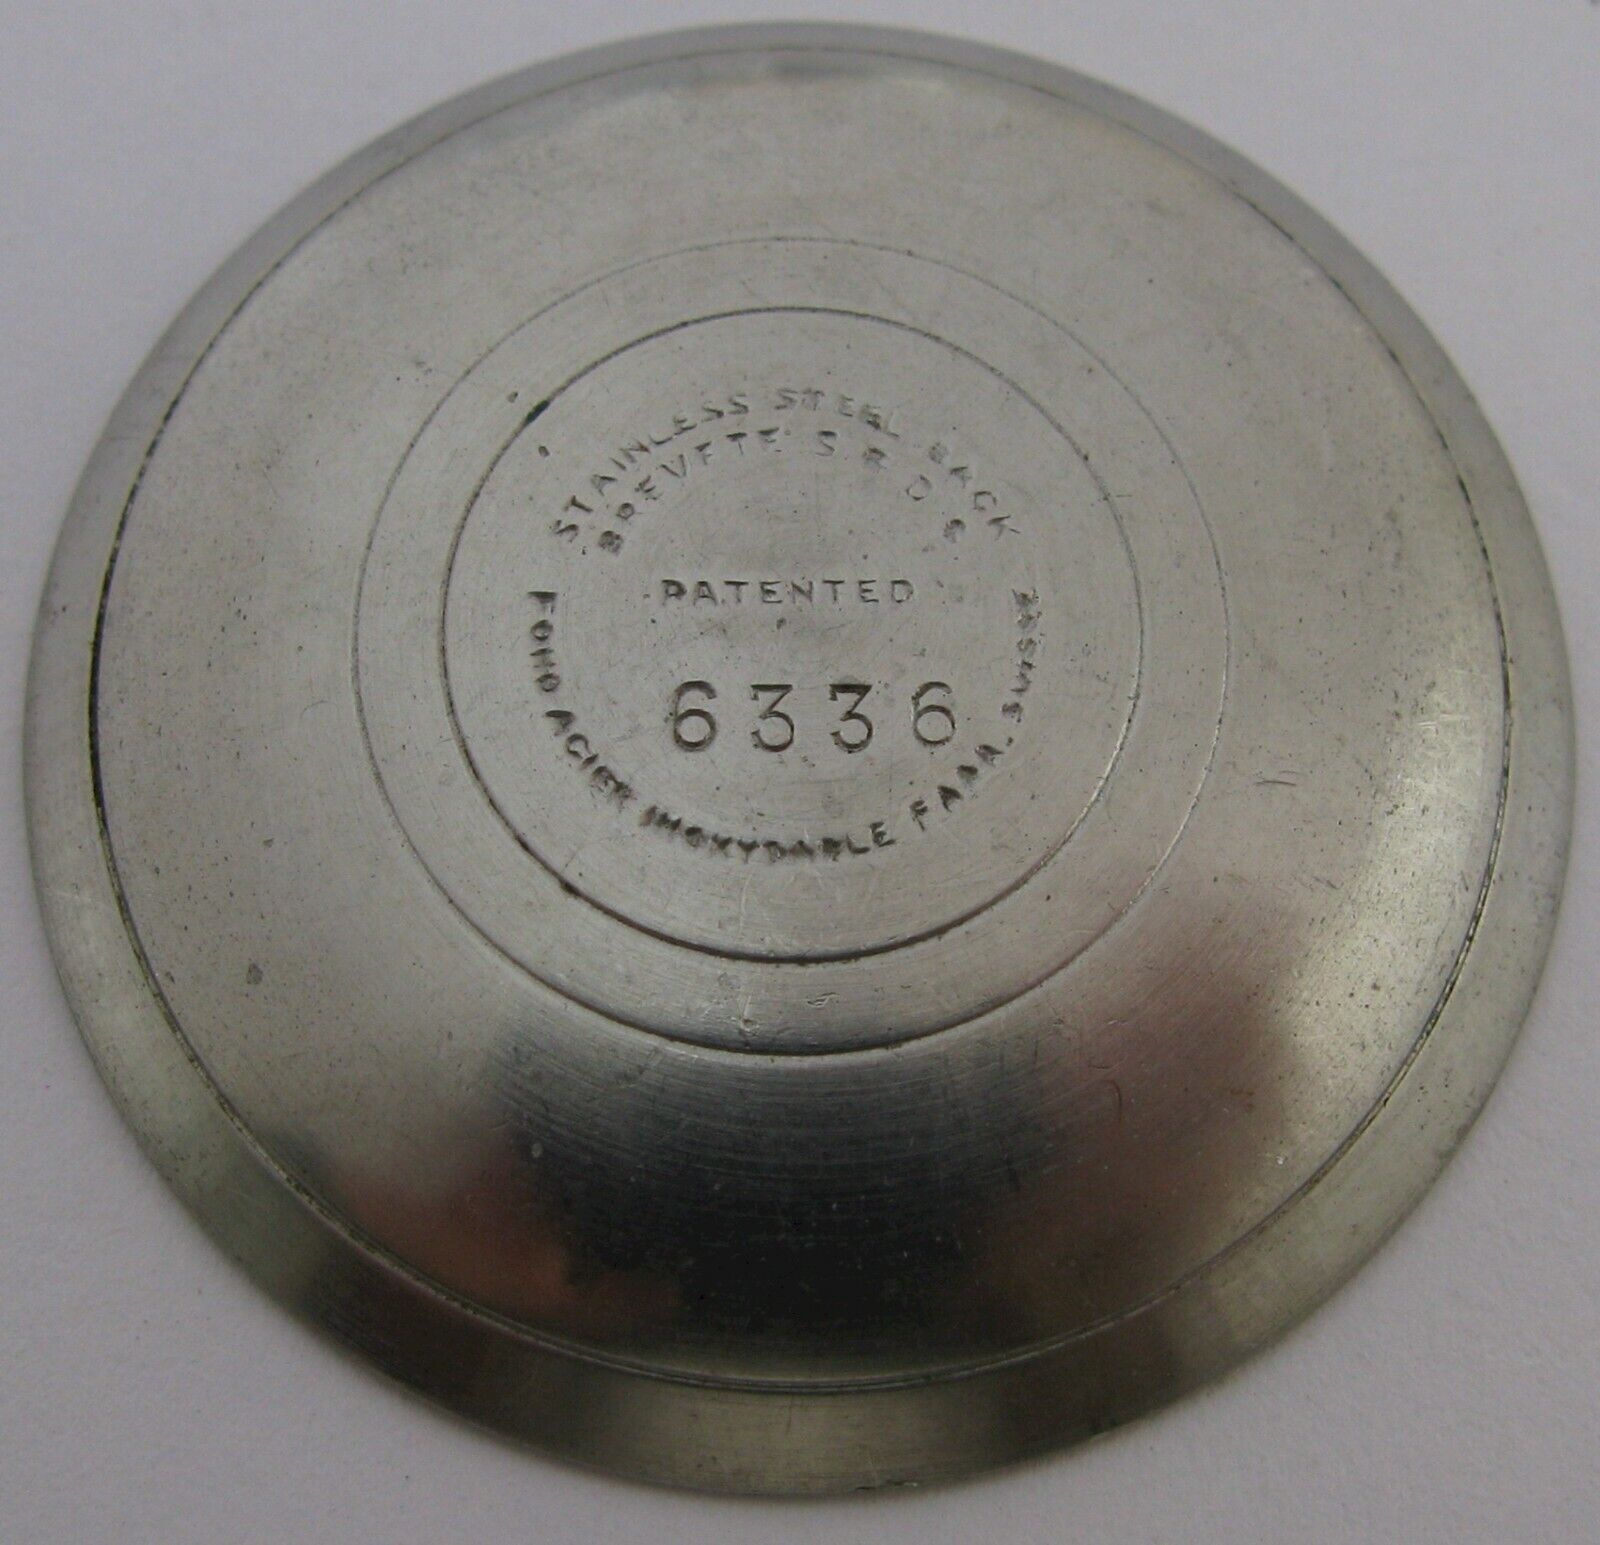 Pierce 130 134 134D Chronograph Watch 6336 back case in s. steel diam. 36.9 mm